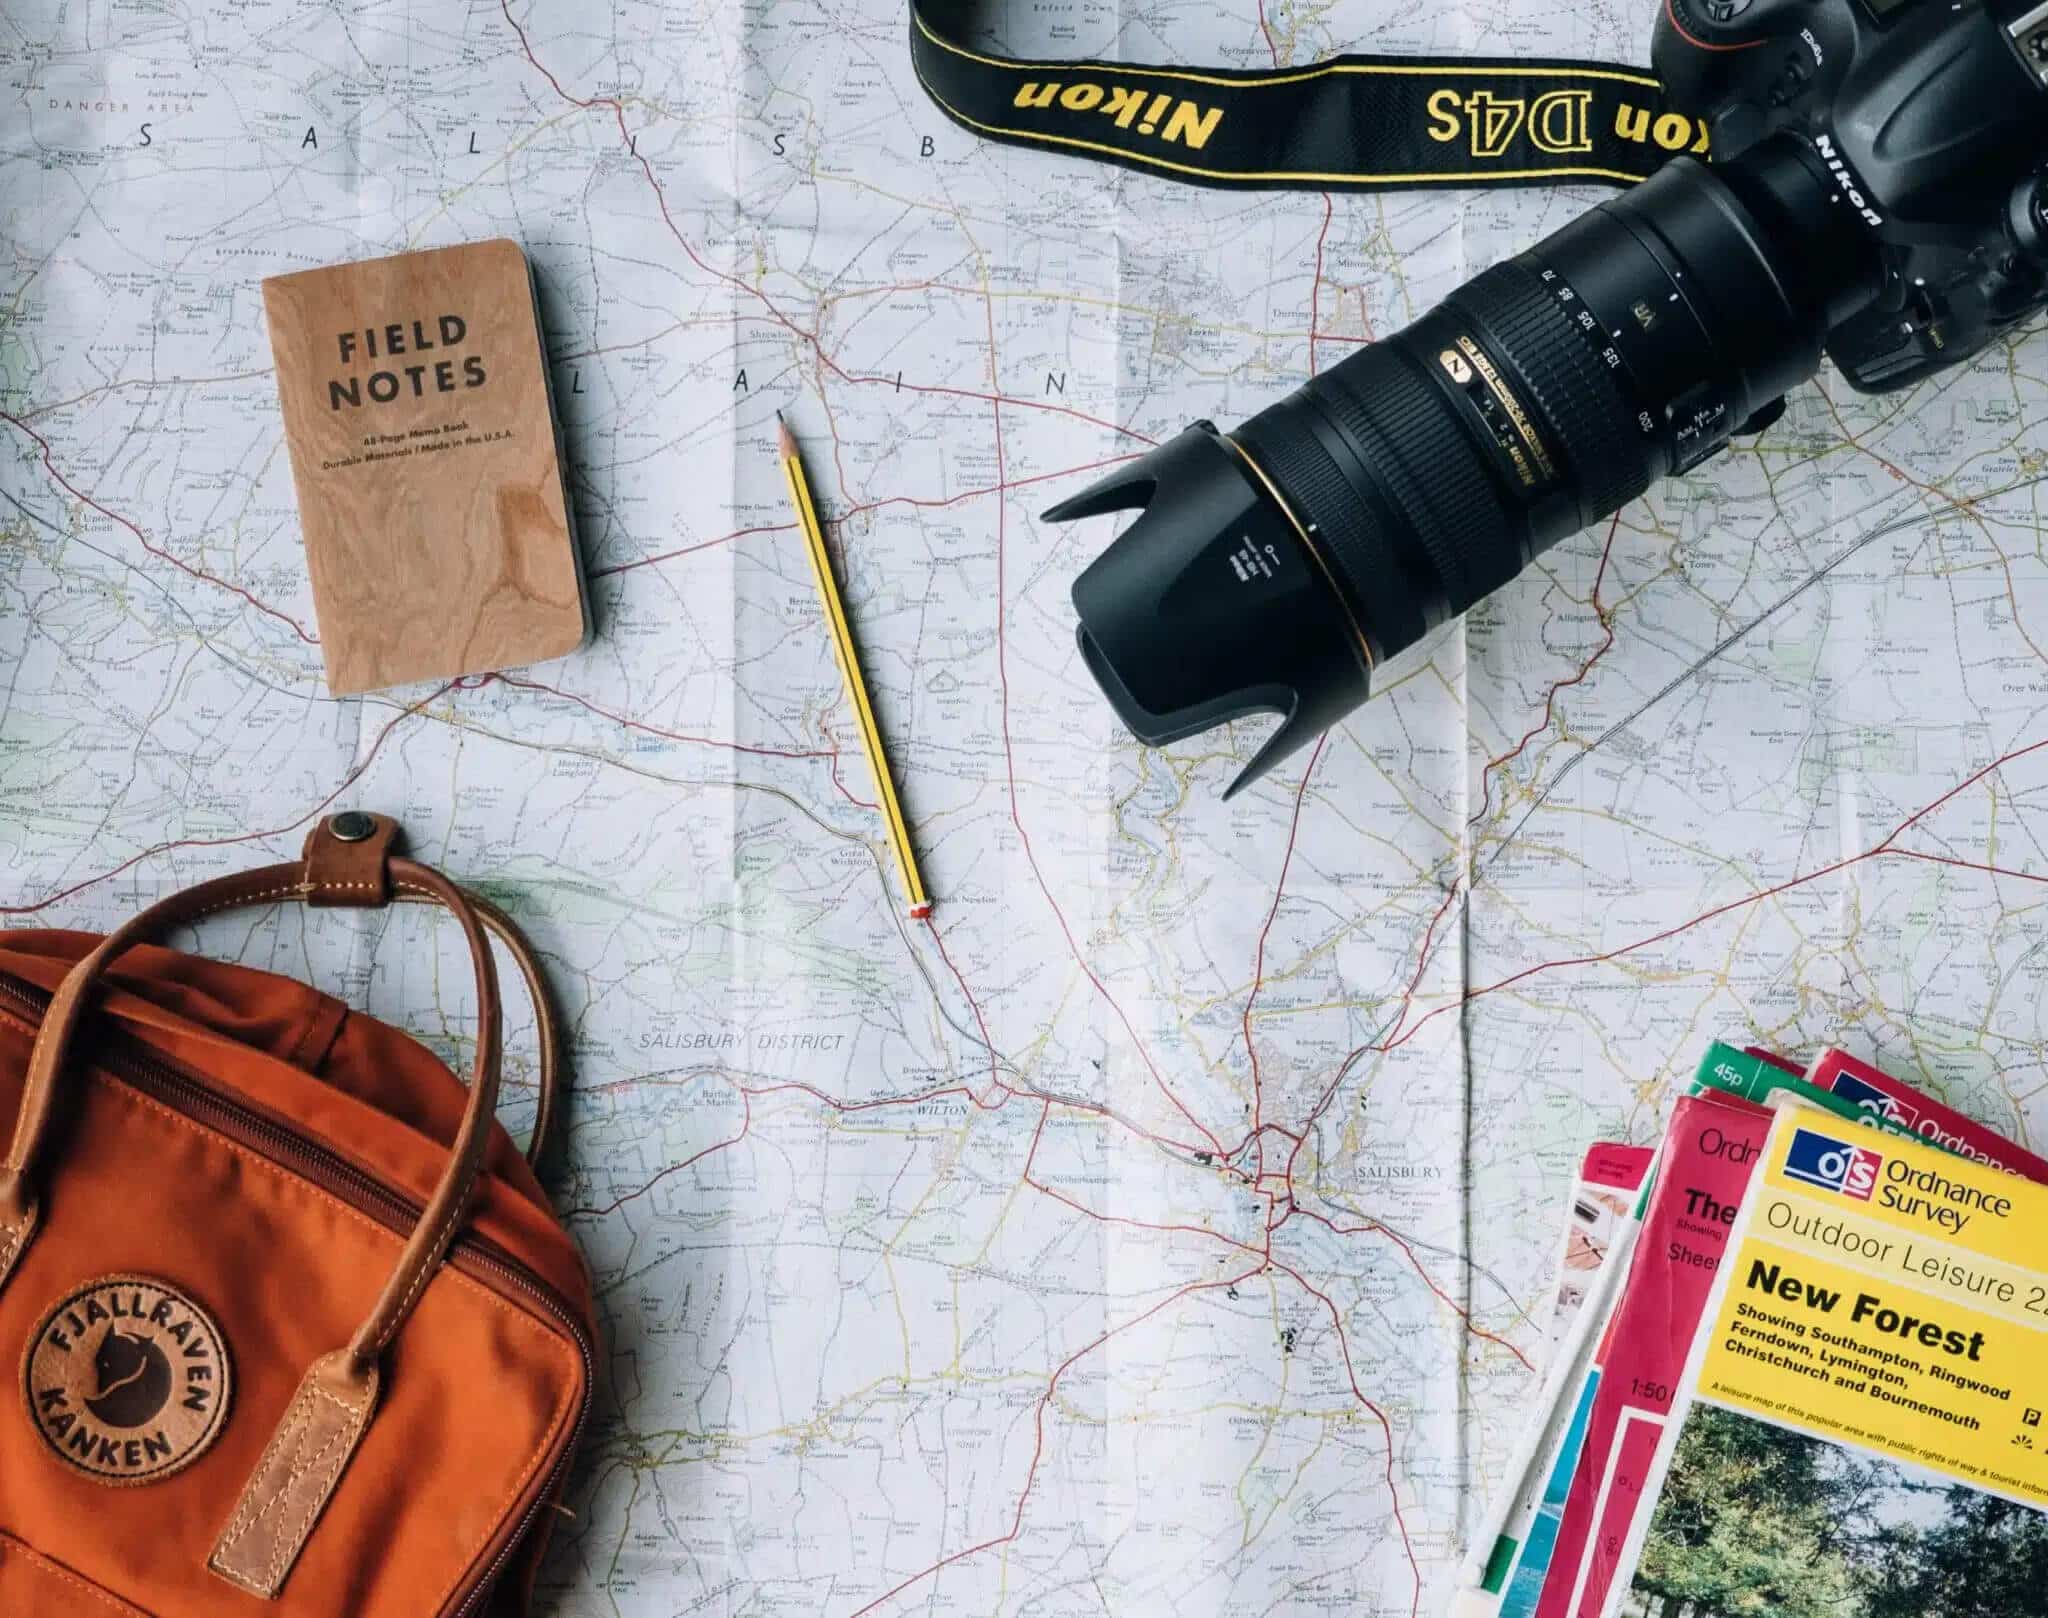 Map, bag, pencil, camera, and books